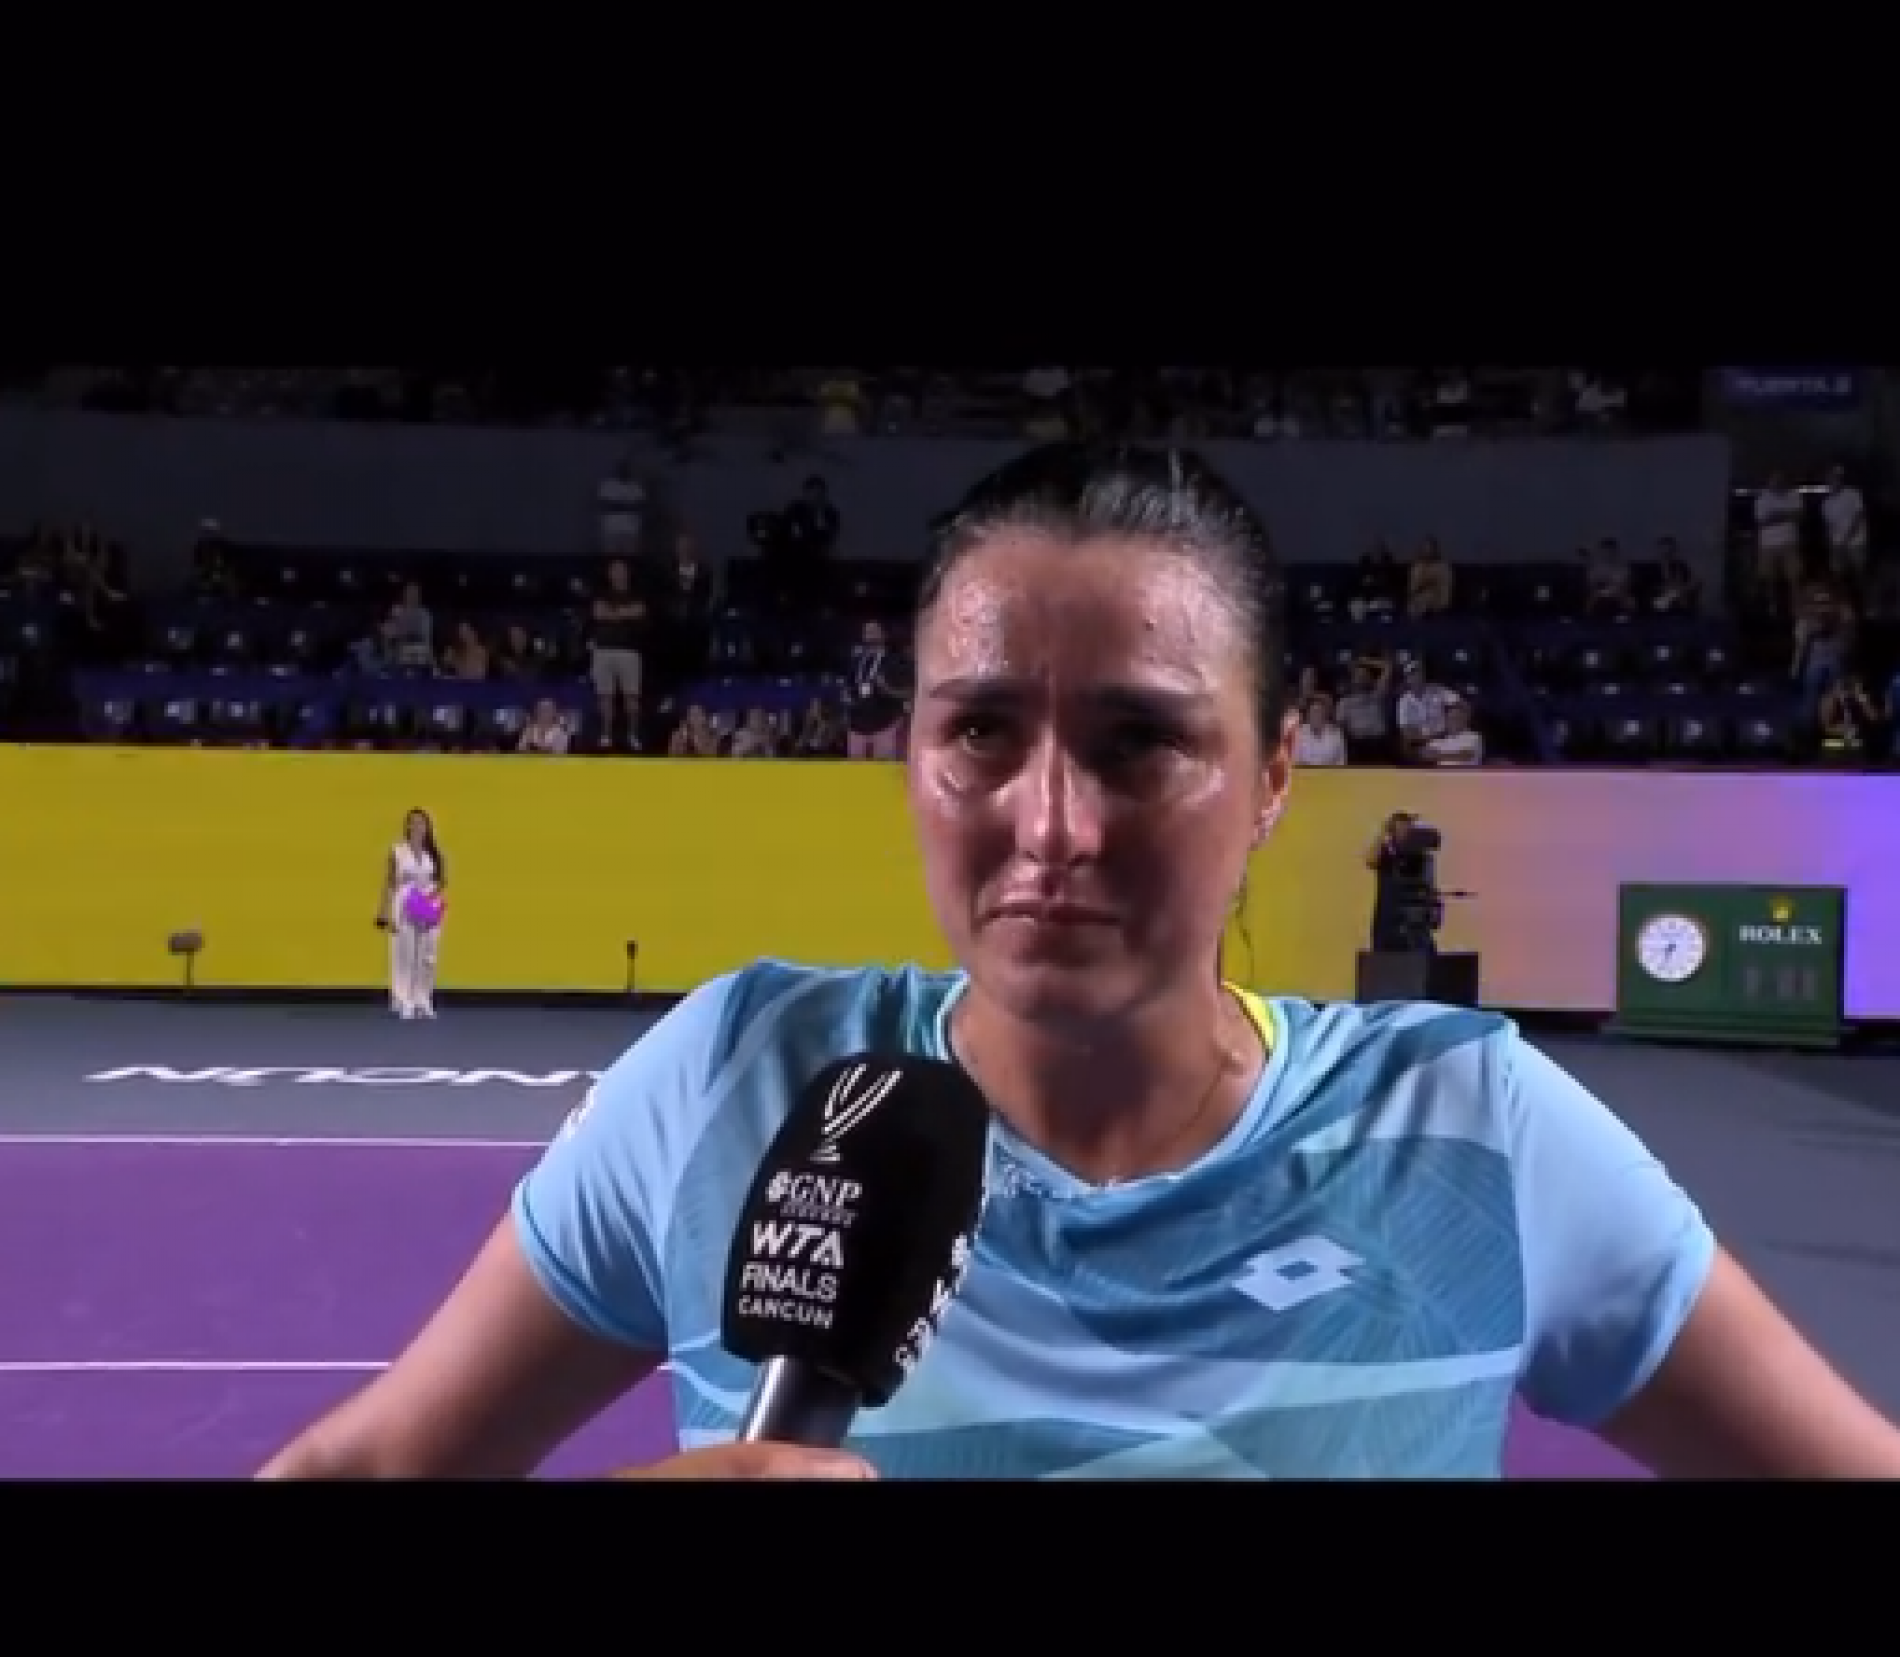 Nakon što je osvojila završni WTA Tour, teniserka Jabeur se rasplakala zbog Gaze